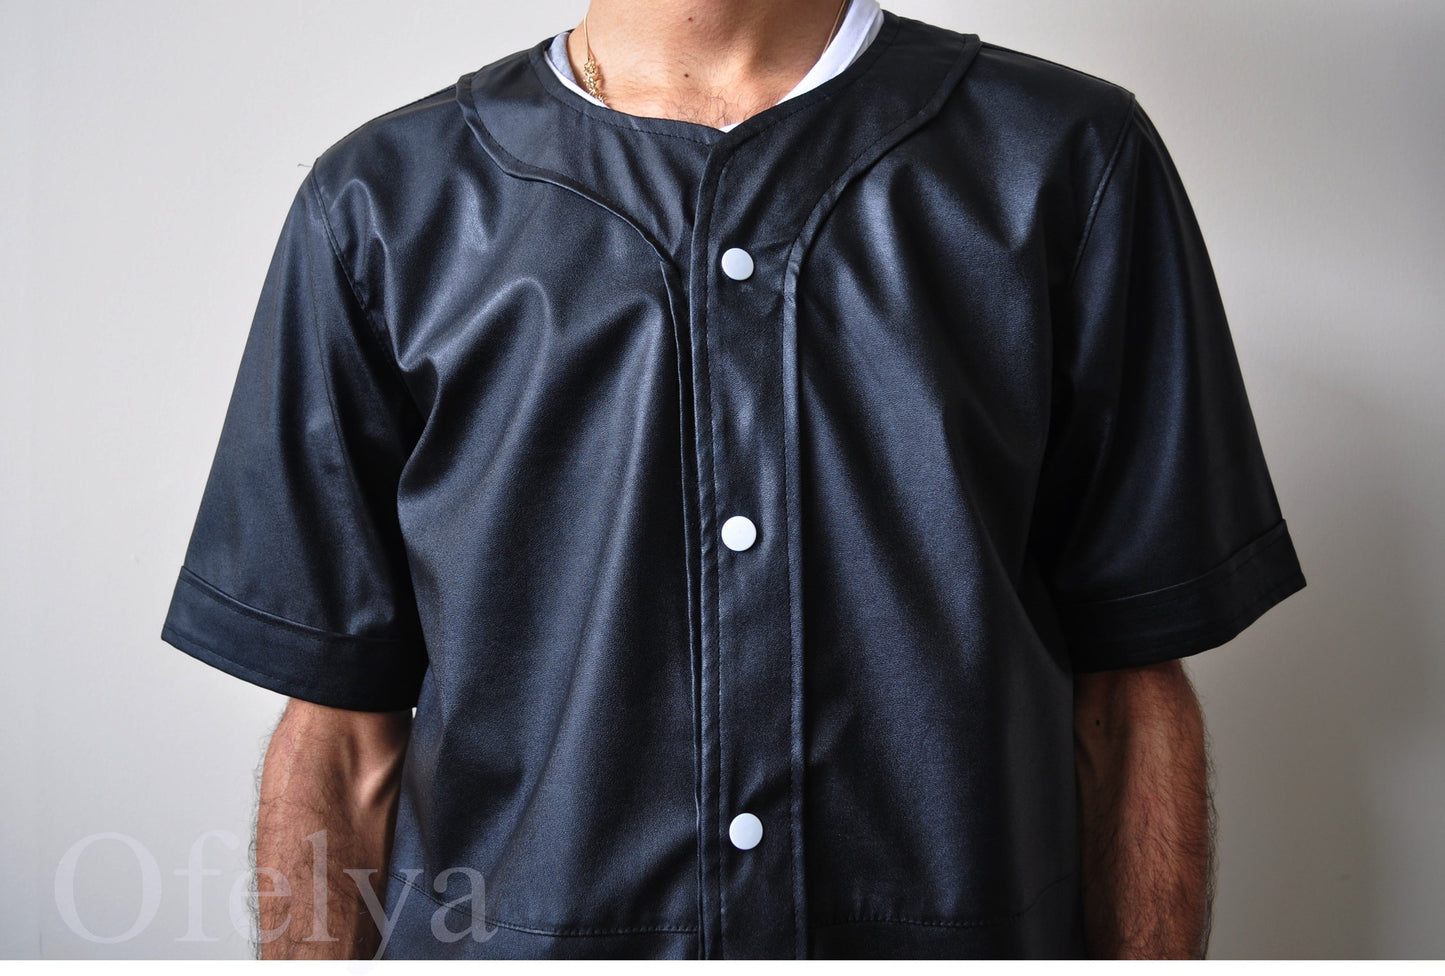 Leather Baseball Jersey Button Closure Shirt 